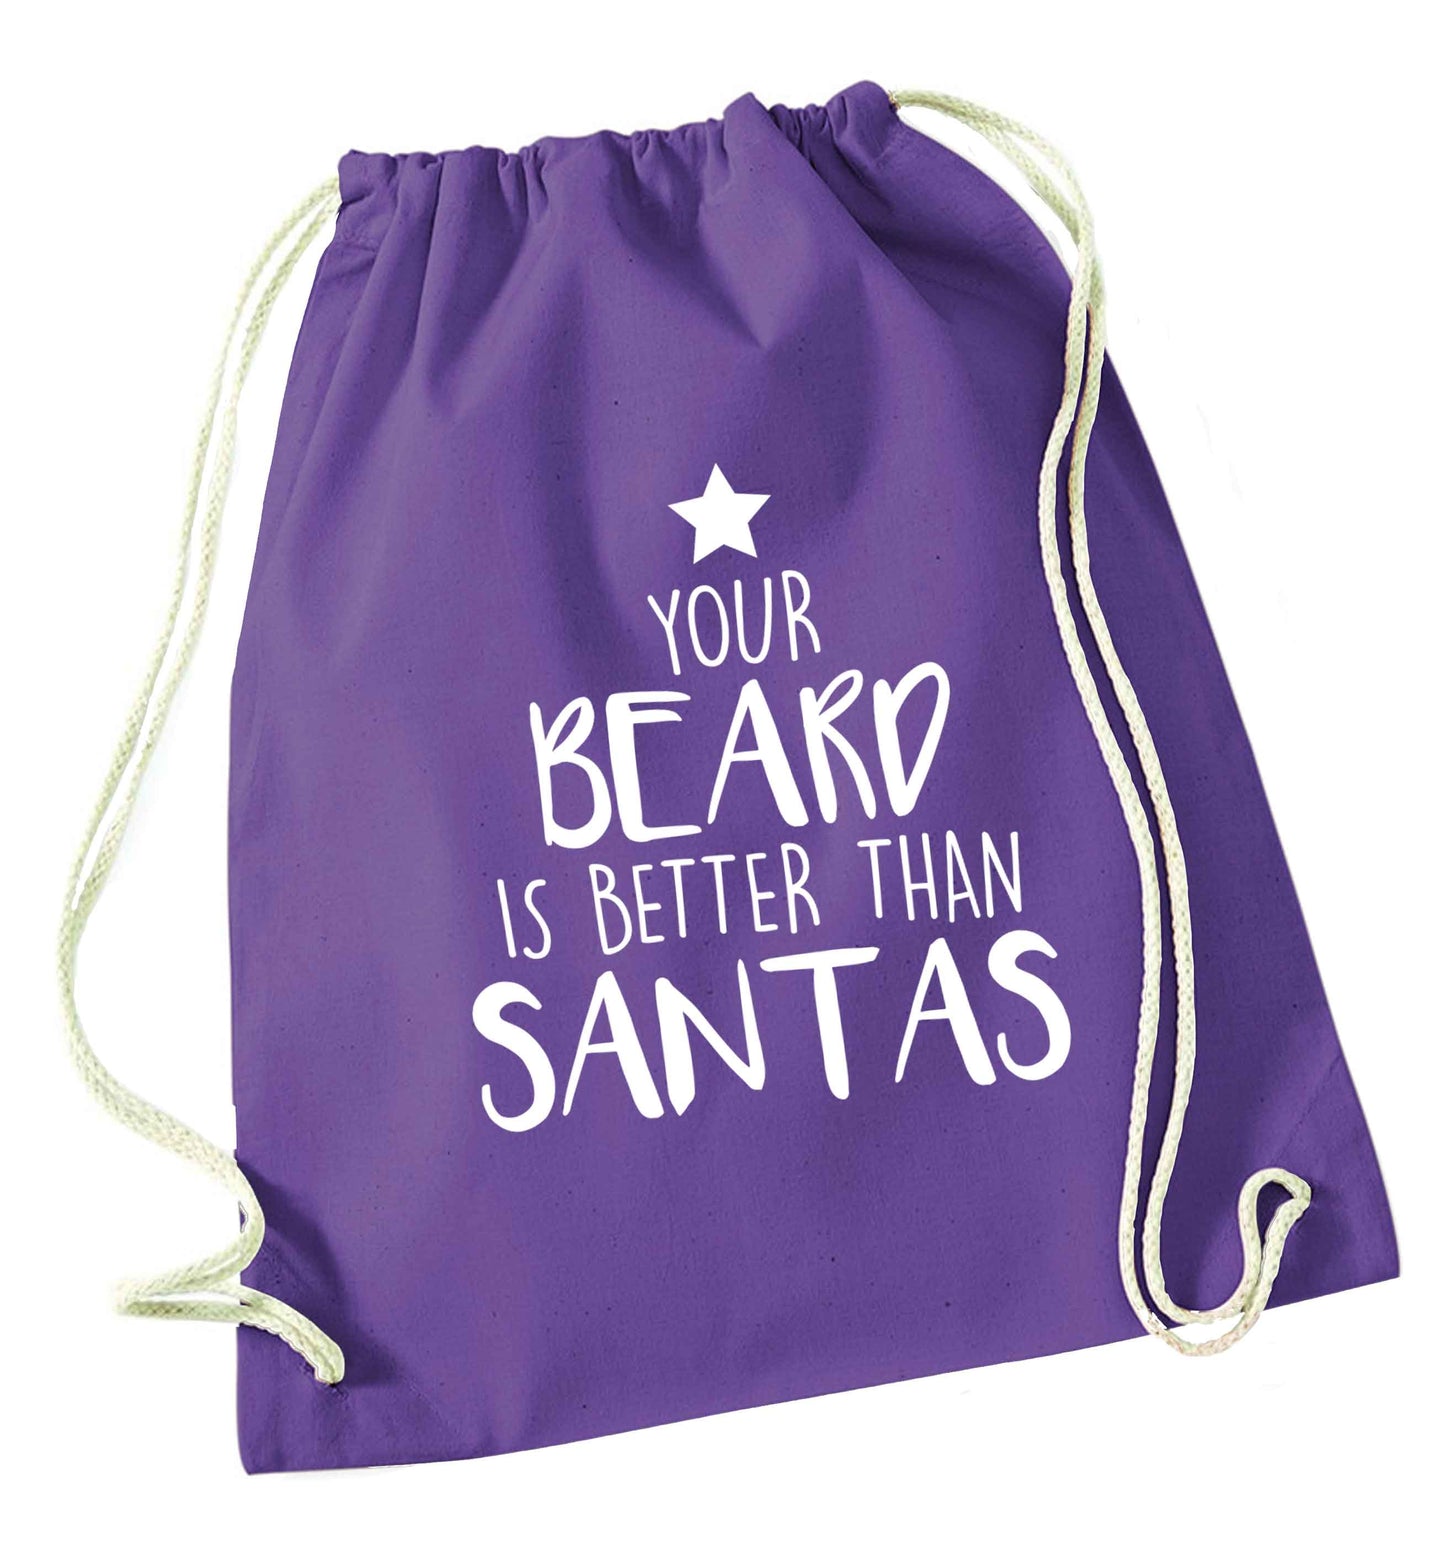 Your Beard Better than Santas purple drawstring bag